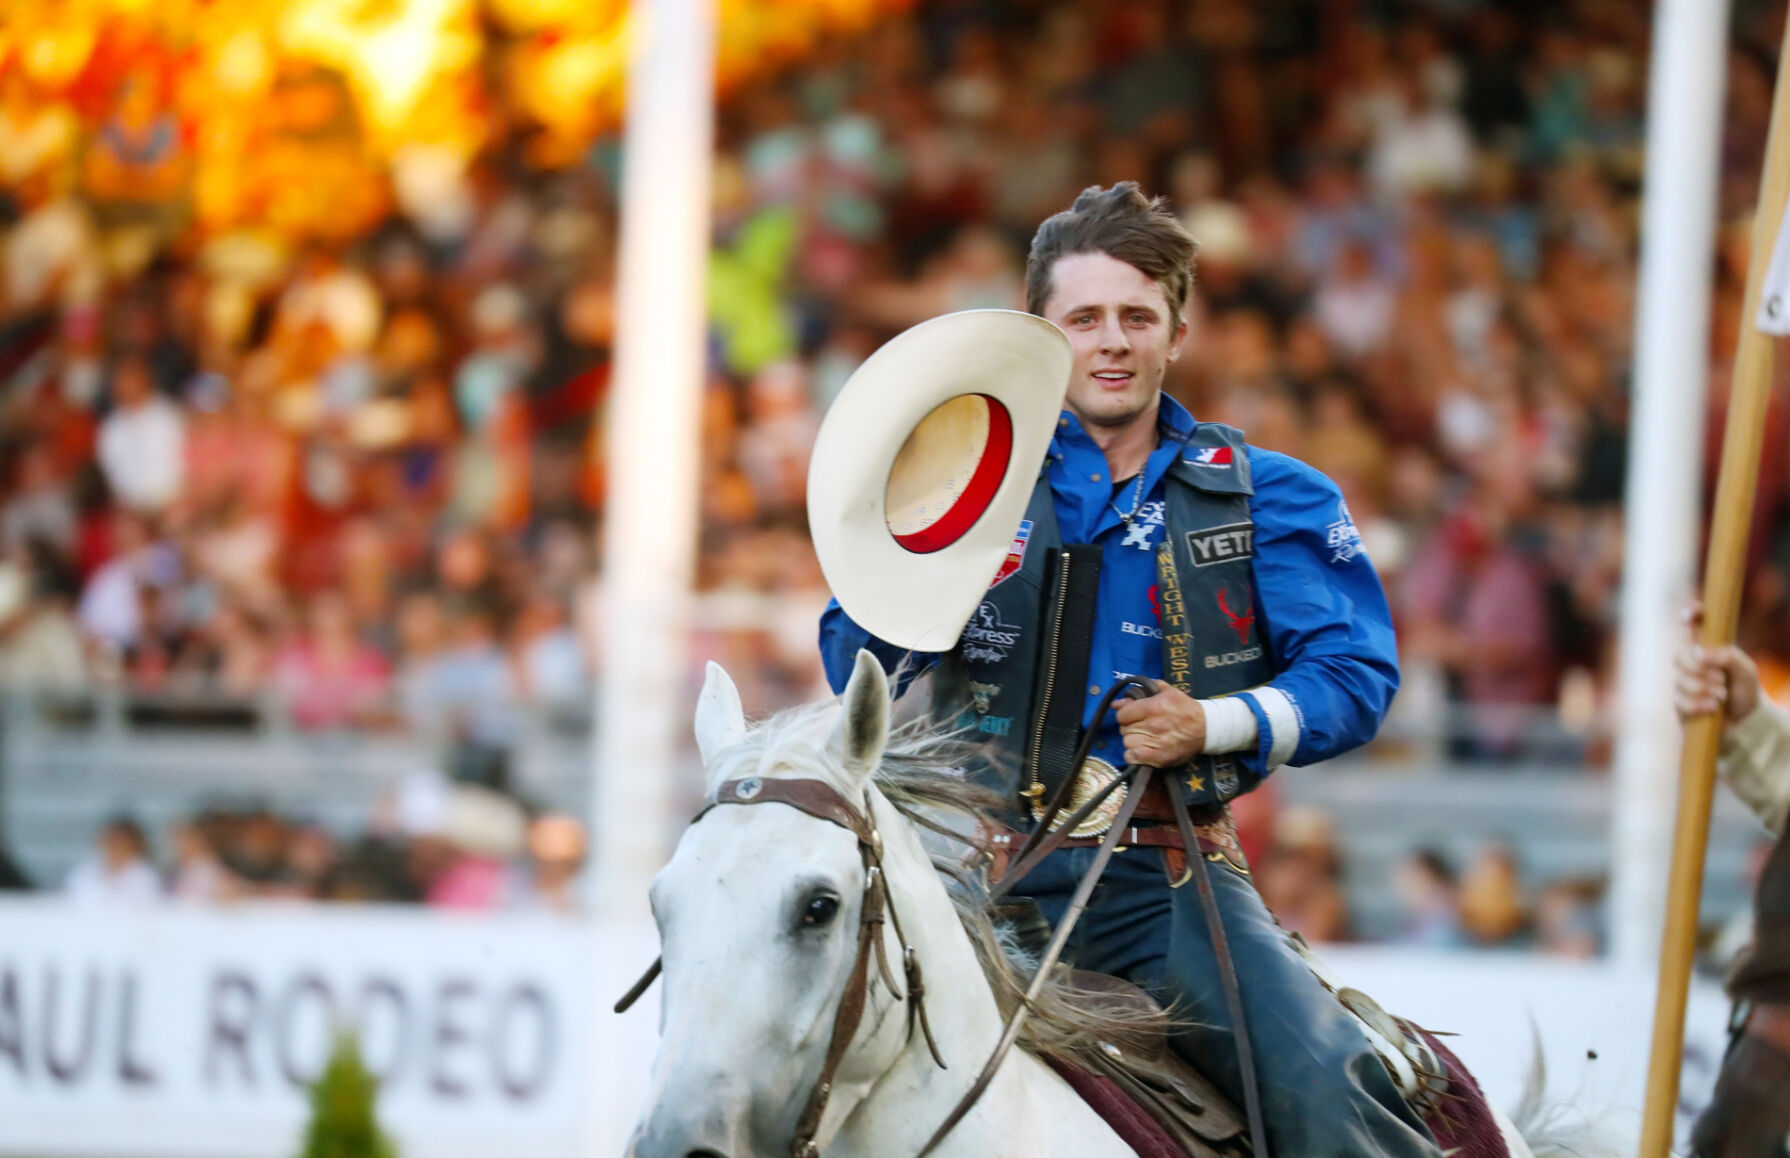 Utah bull rider part of family rodeo dynasty | News